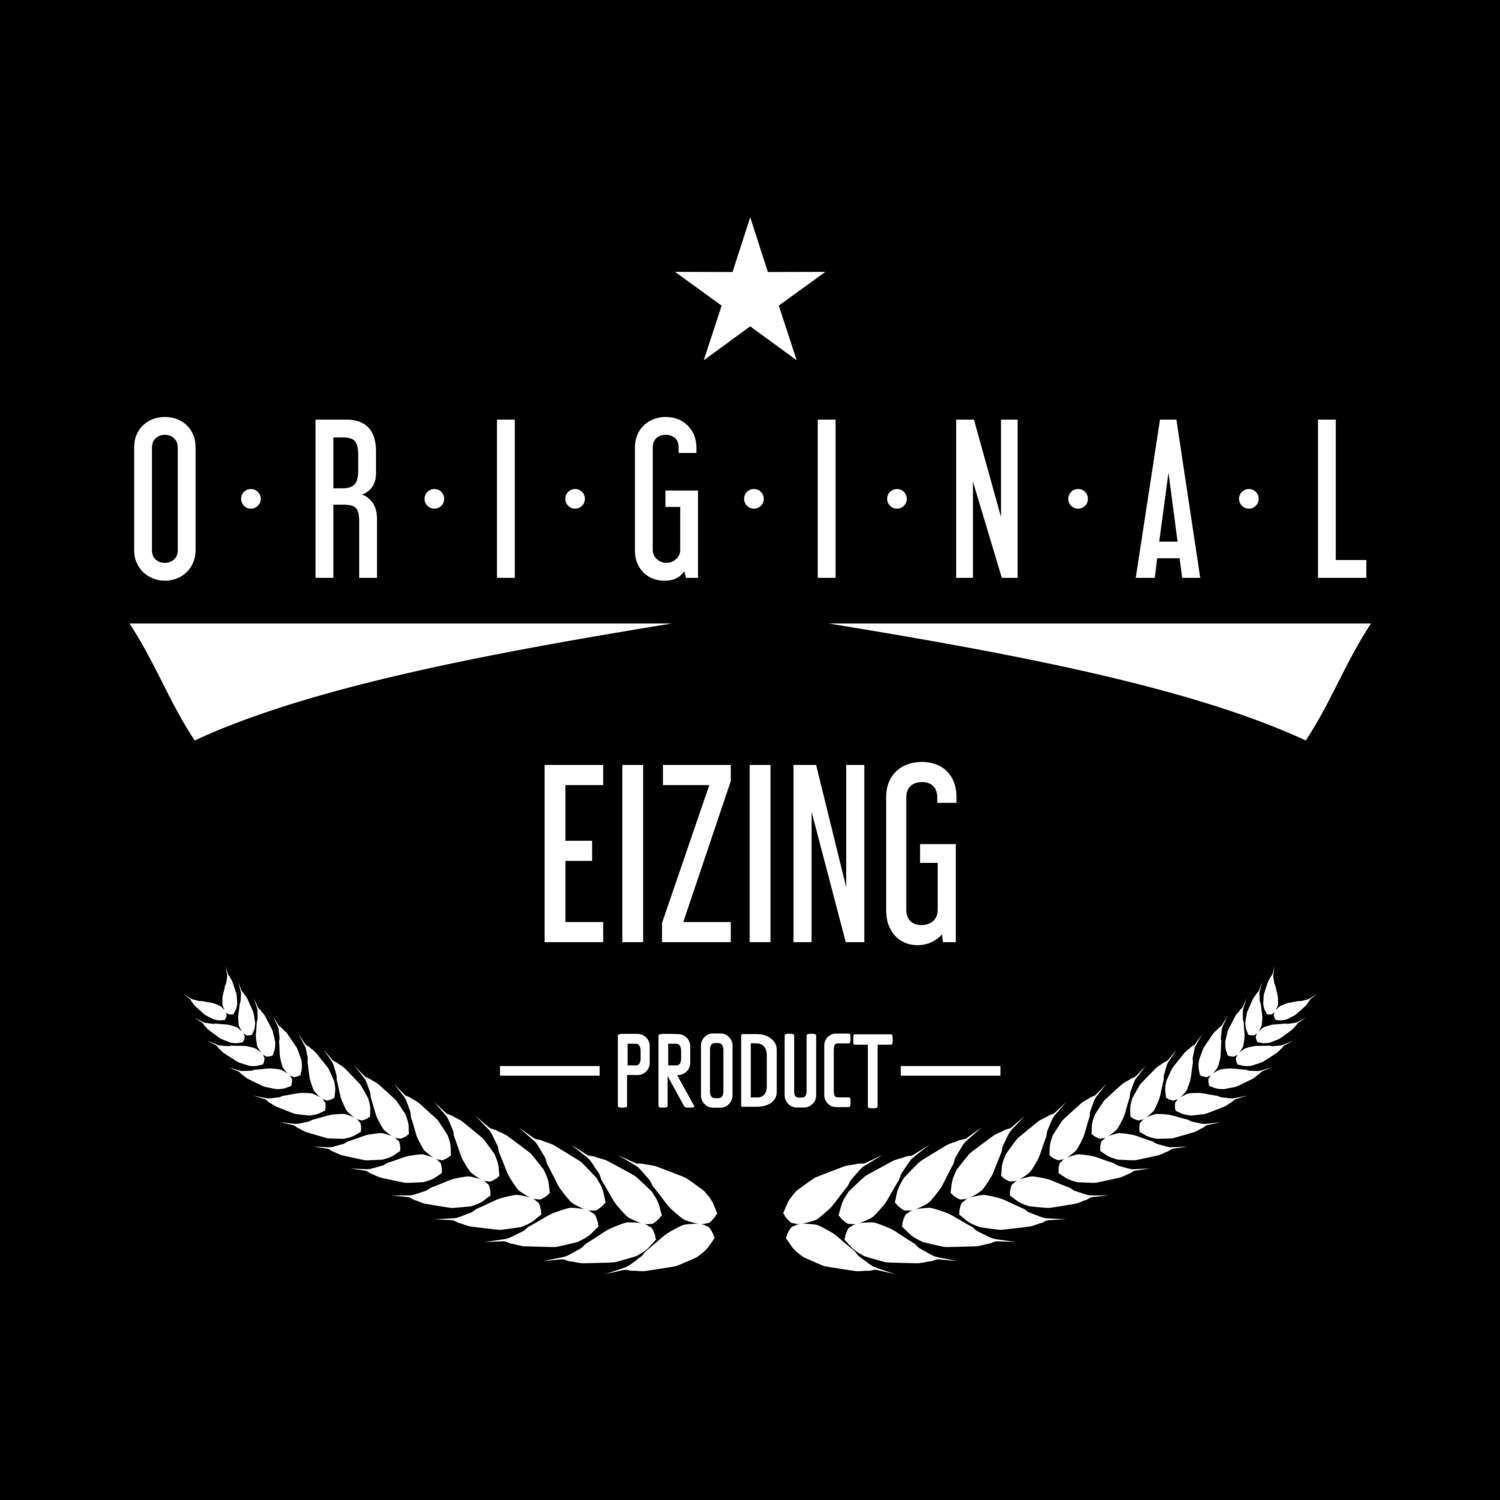 Eizing T-Shirt »Original Product«